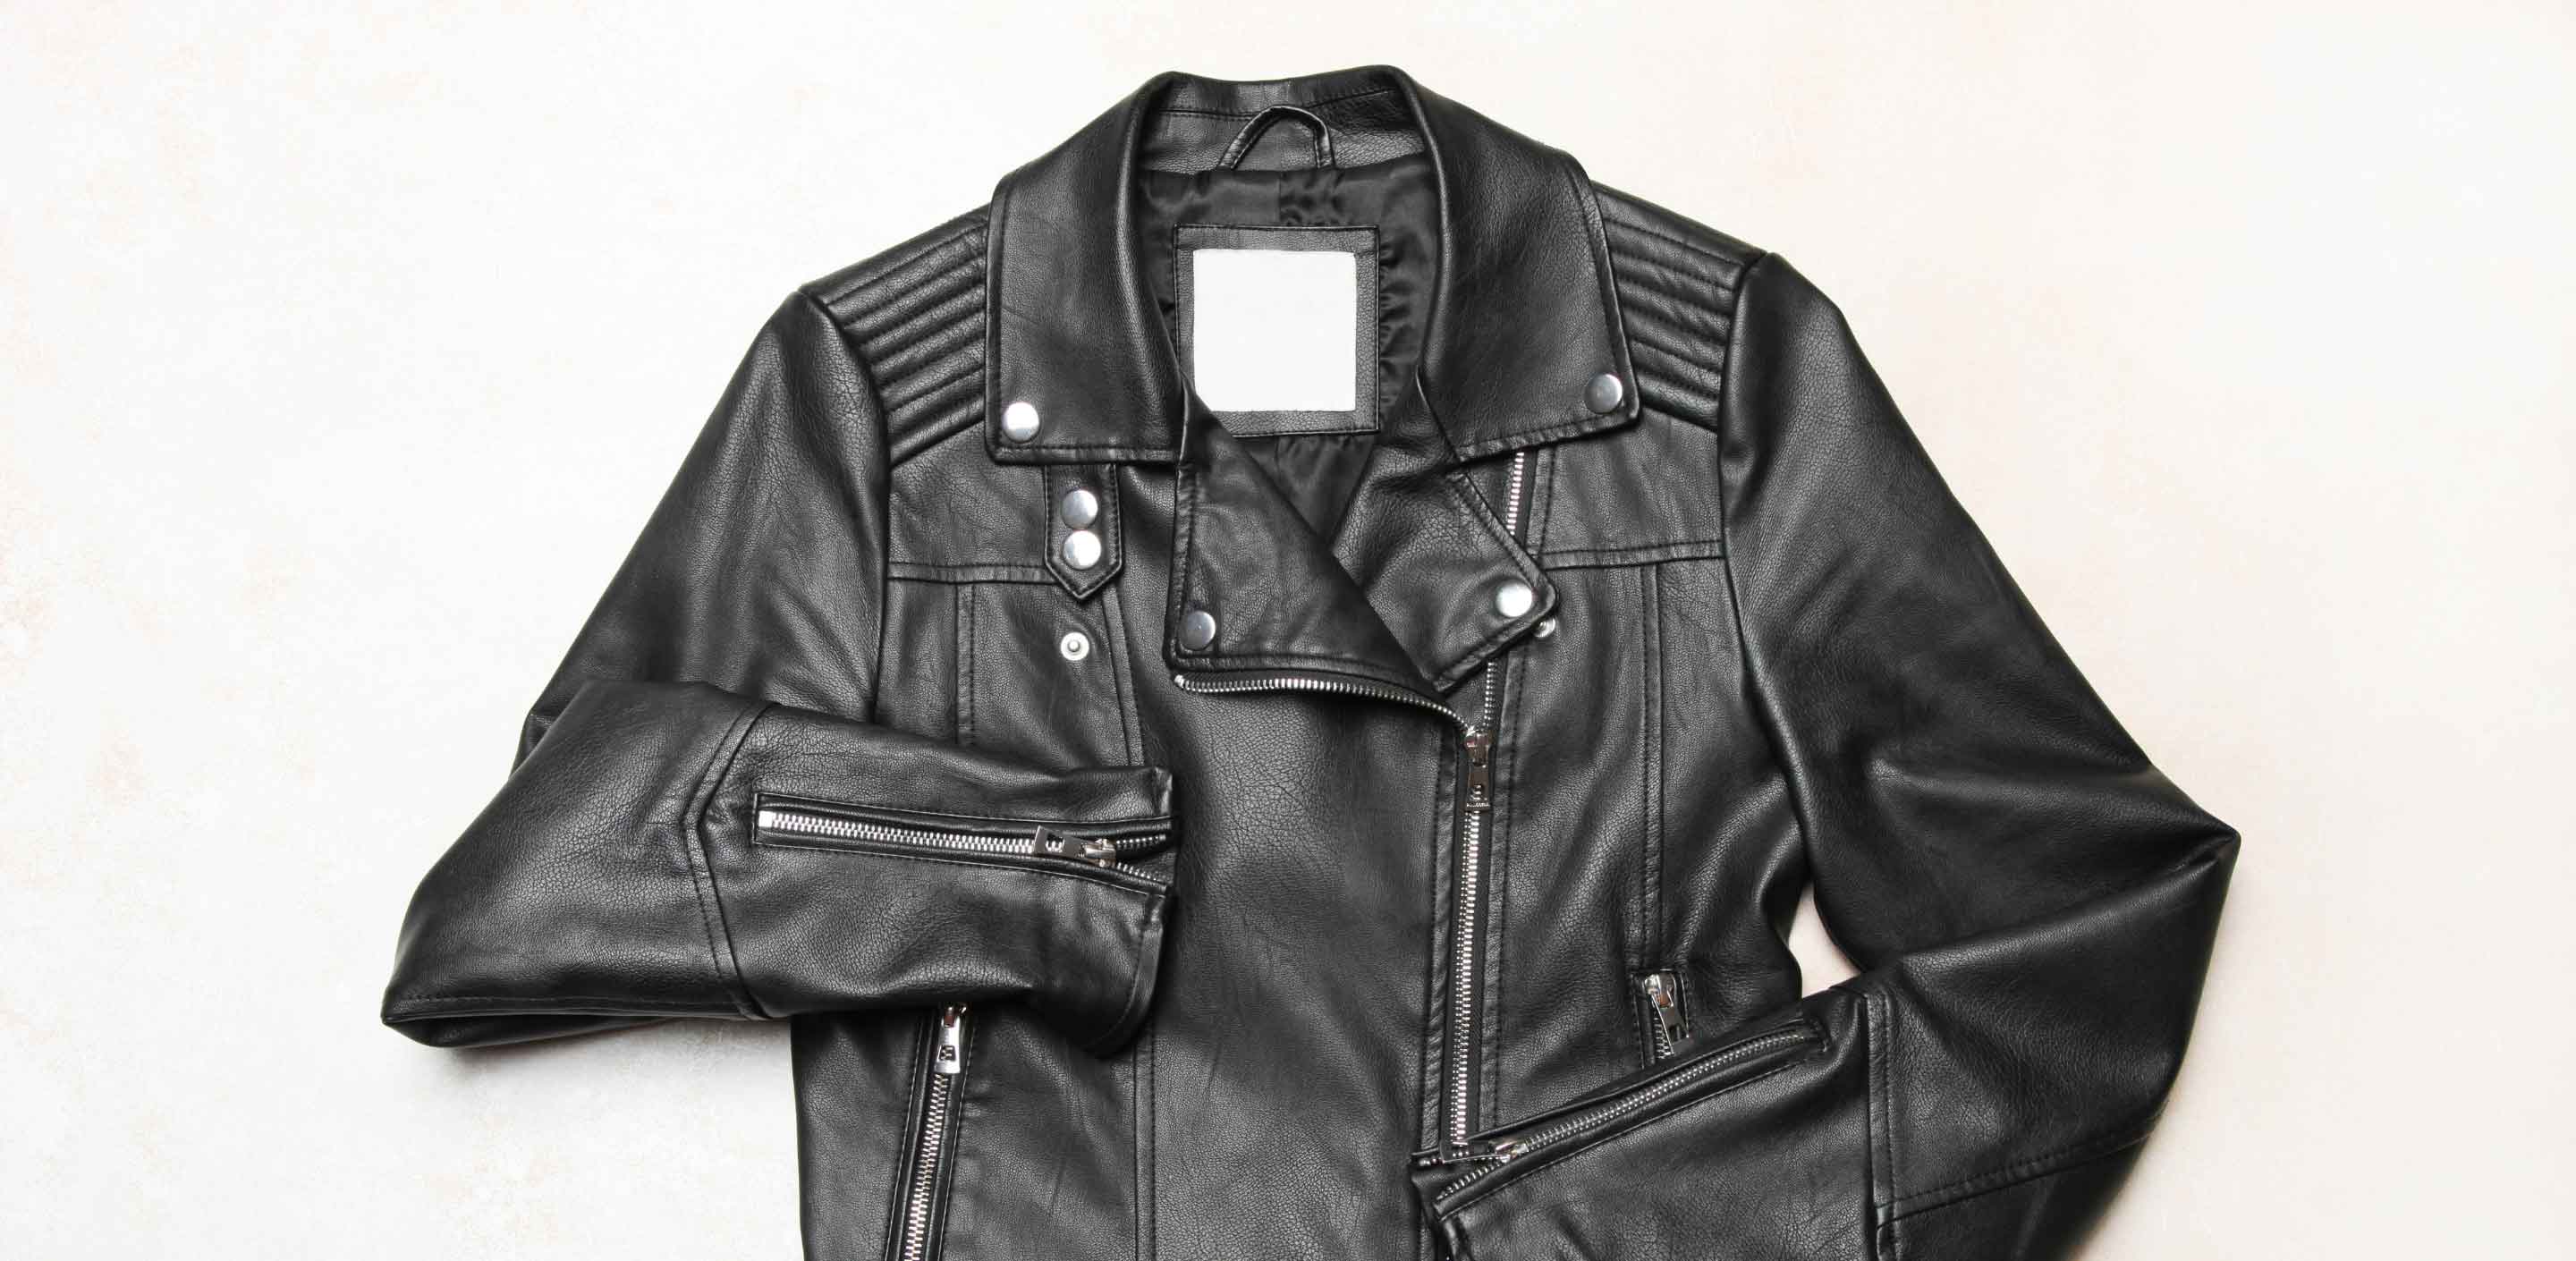 How To Polish A Leather Jacket